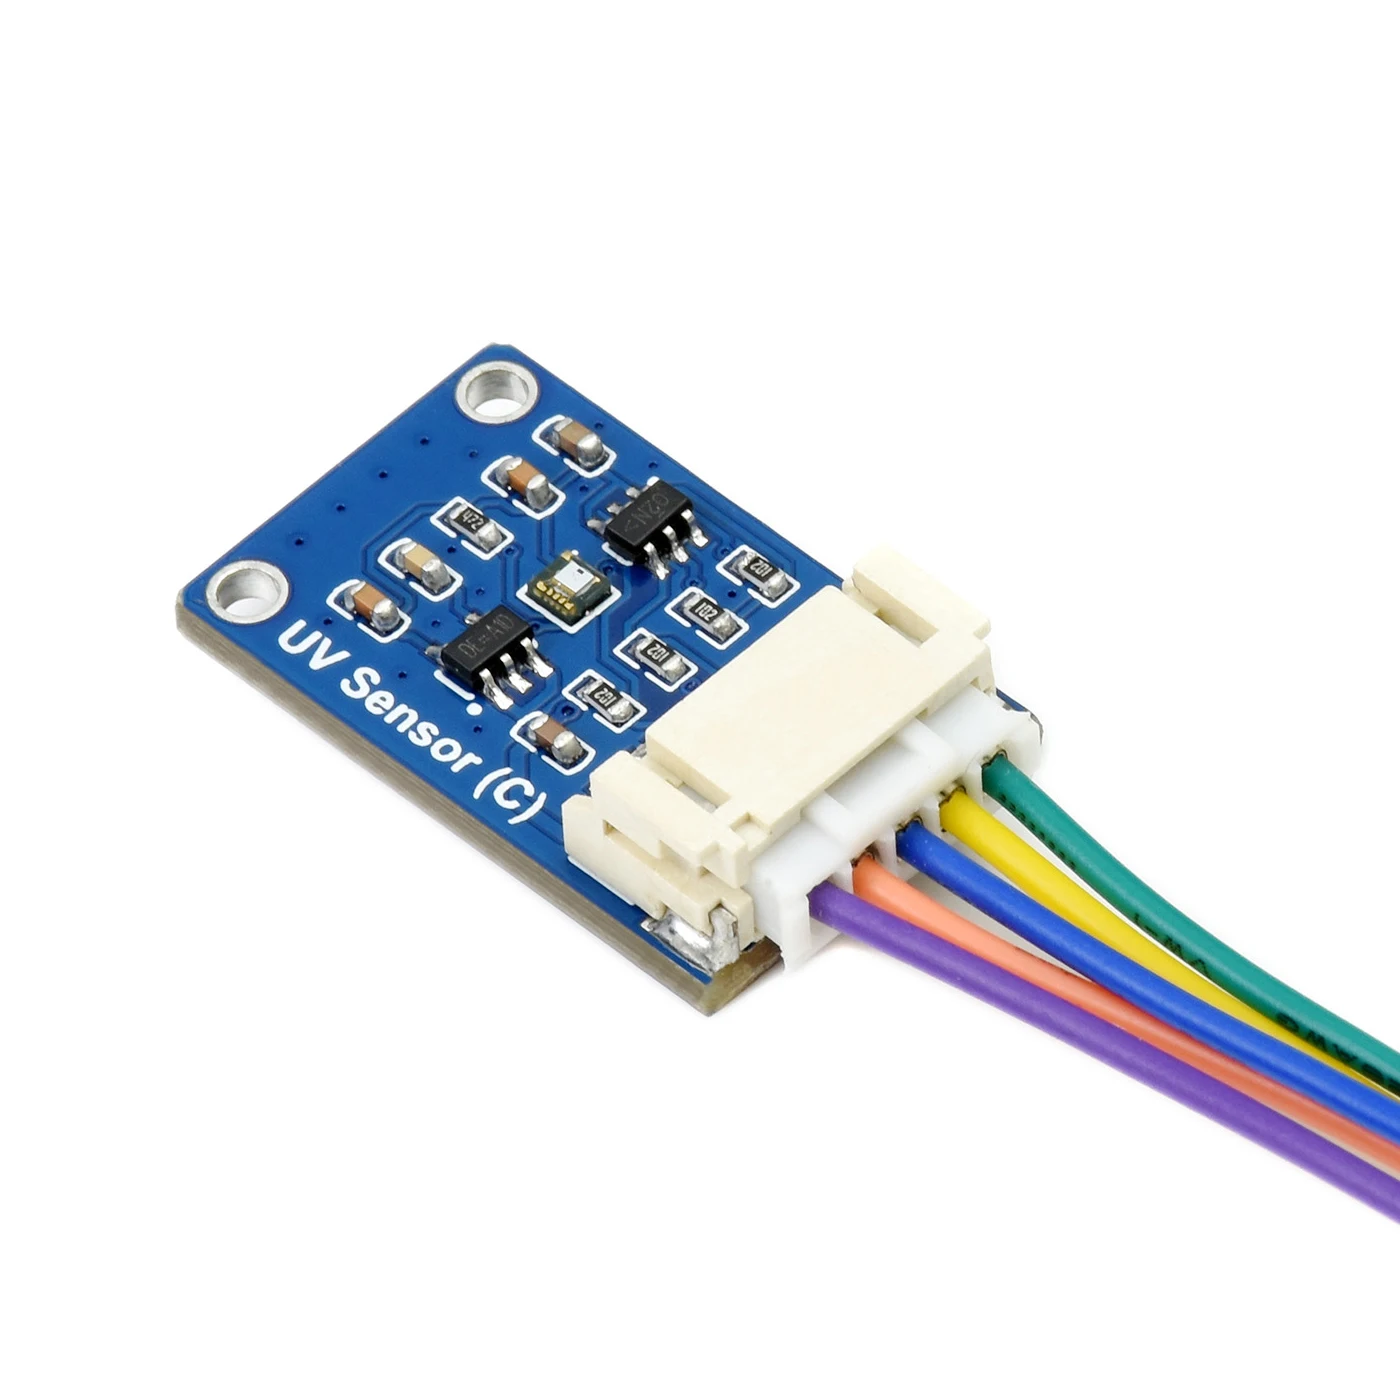 3.3V 5V I2C Digital UV Ultraviolet Sensor ALS Ambient Light Module for Arduino STM32 RPI Raspberry Pi 3 Model B 3B Plus 4 4B